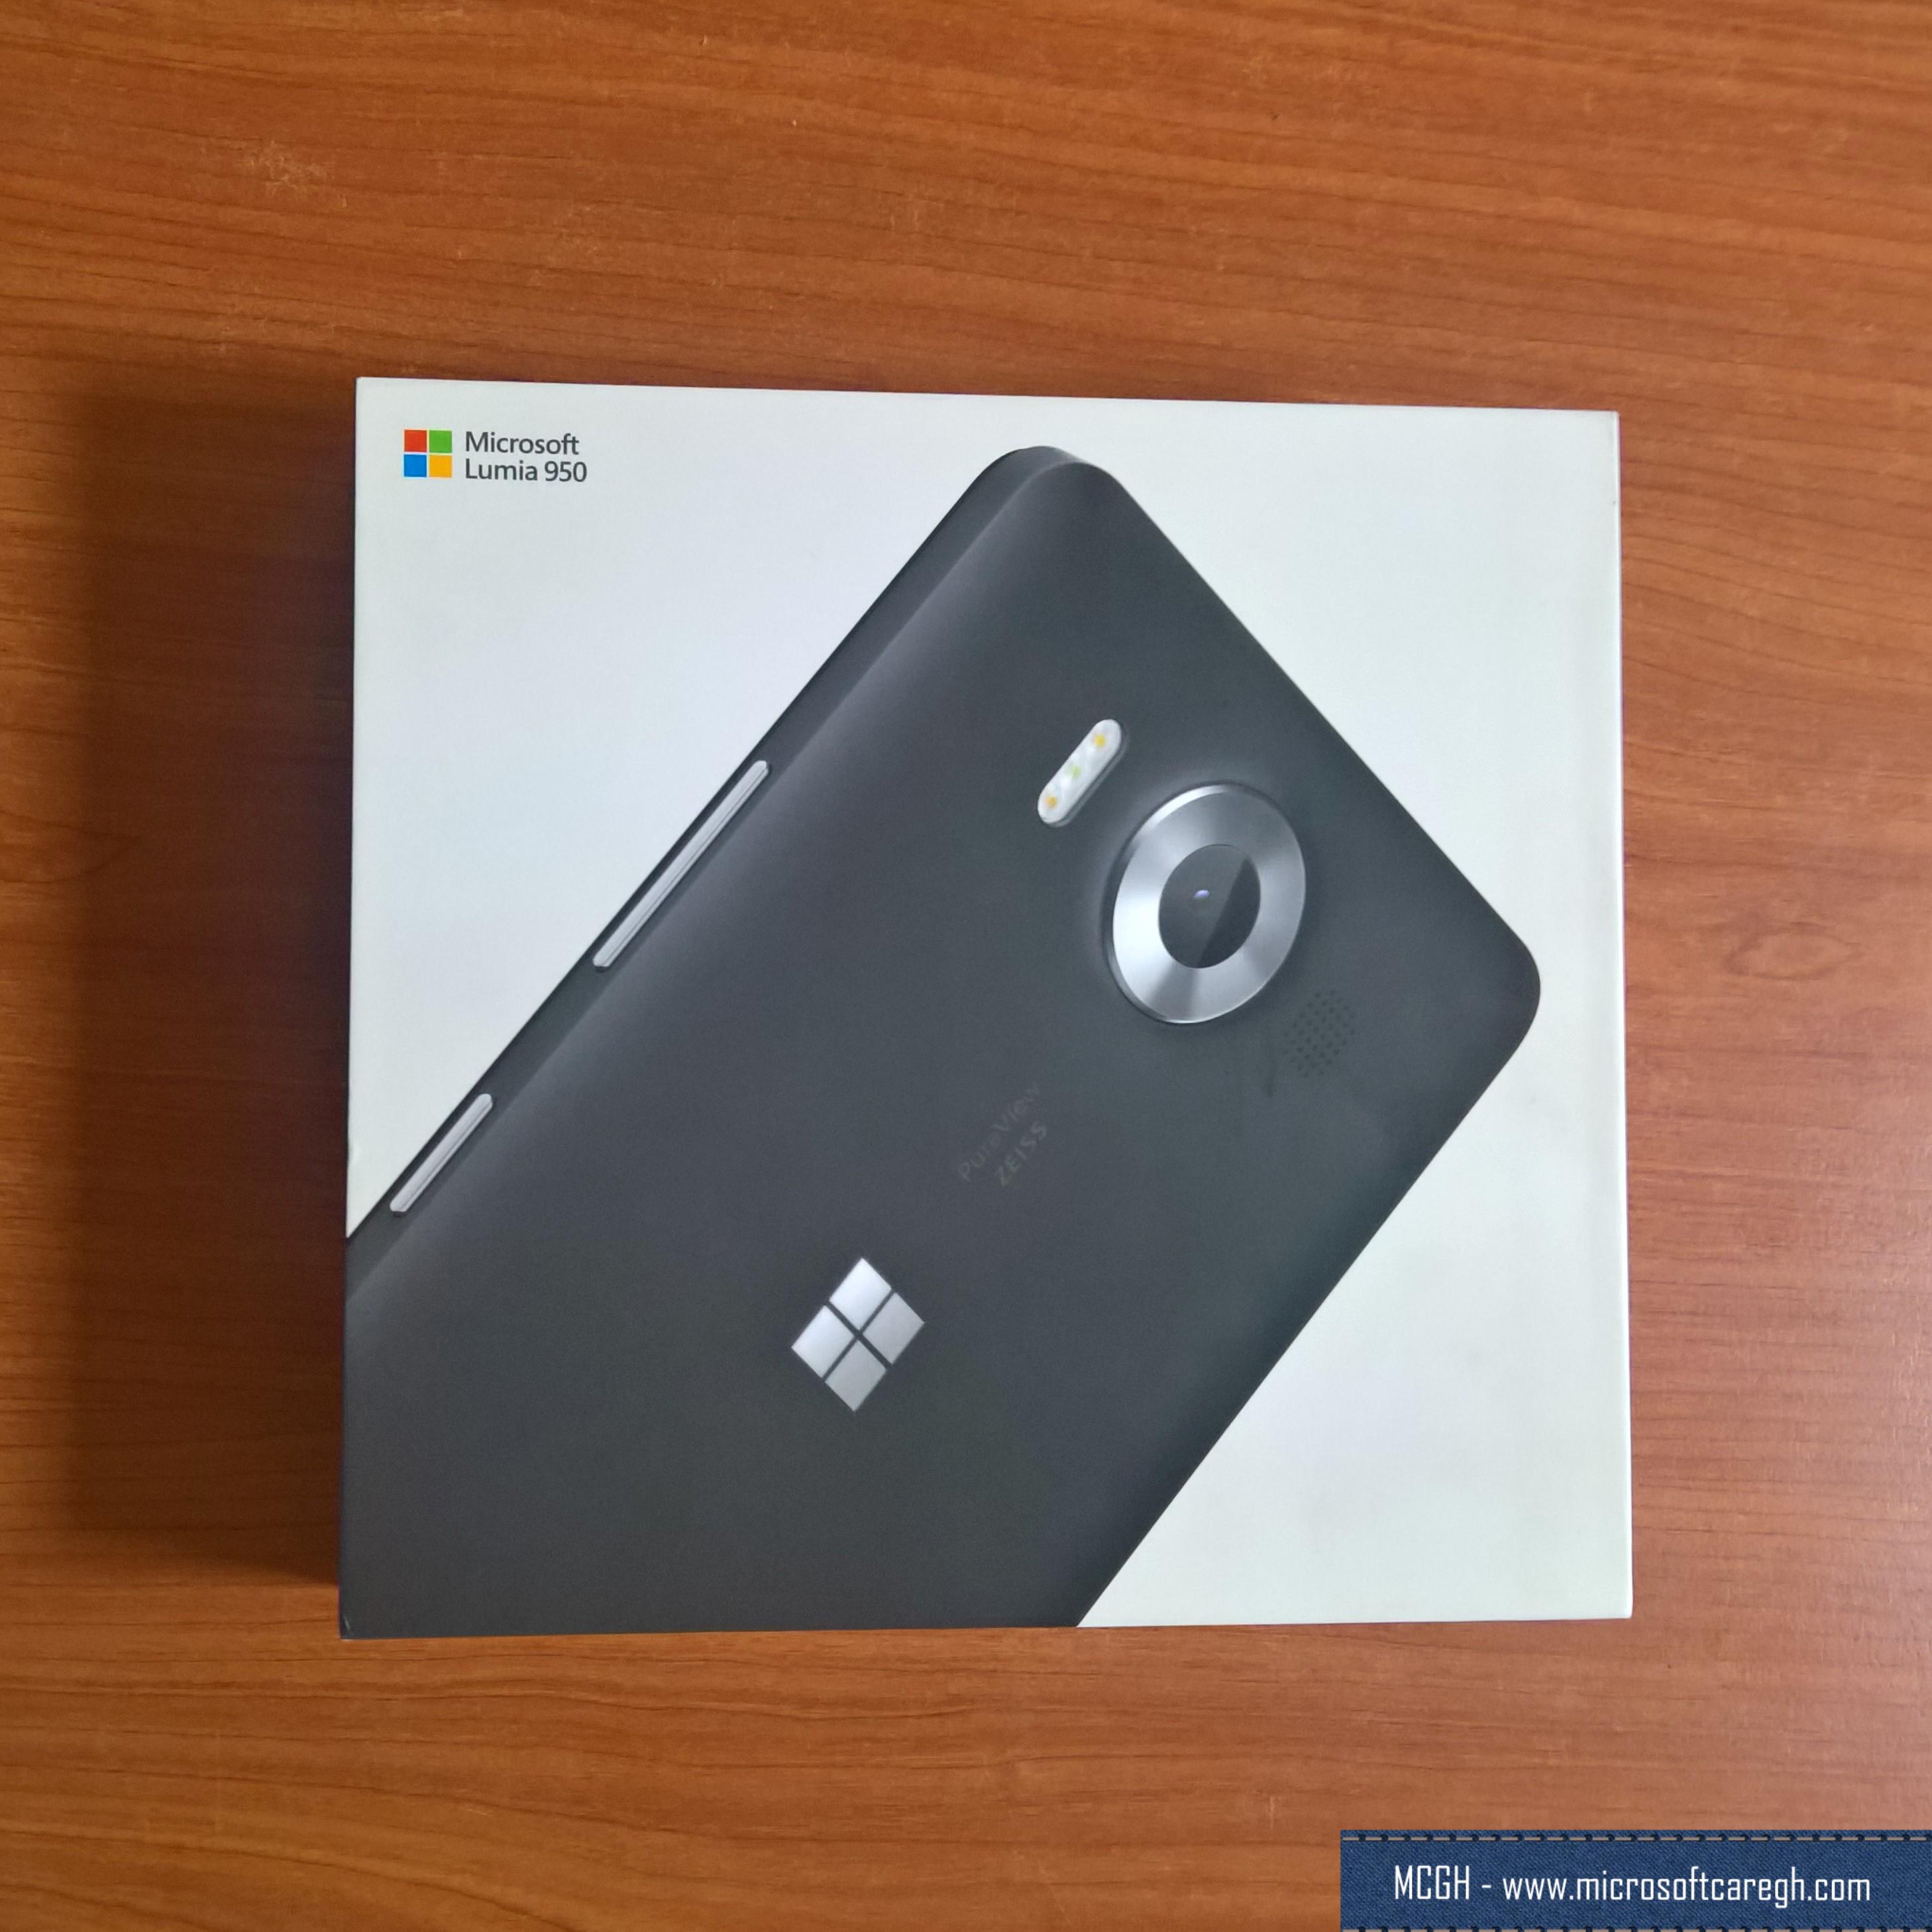 Meet the Microsoft Lumia 950 Dual SIM